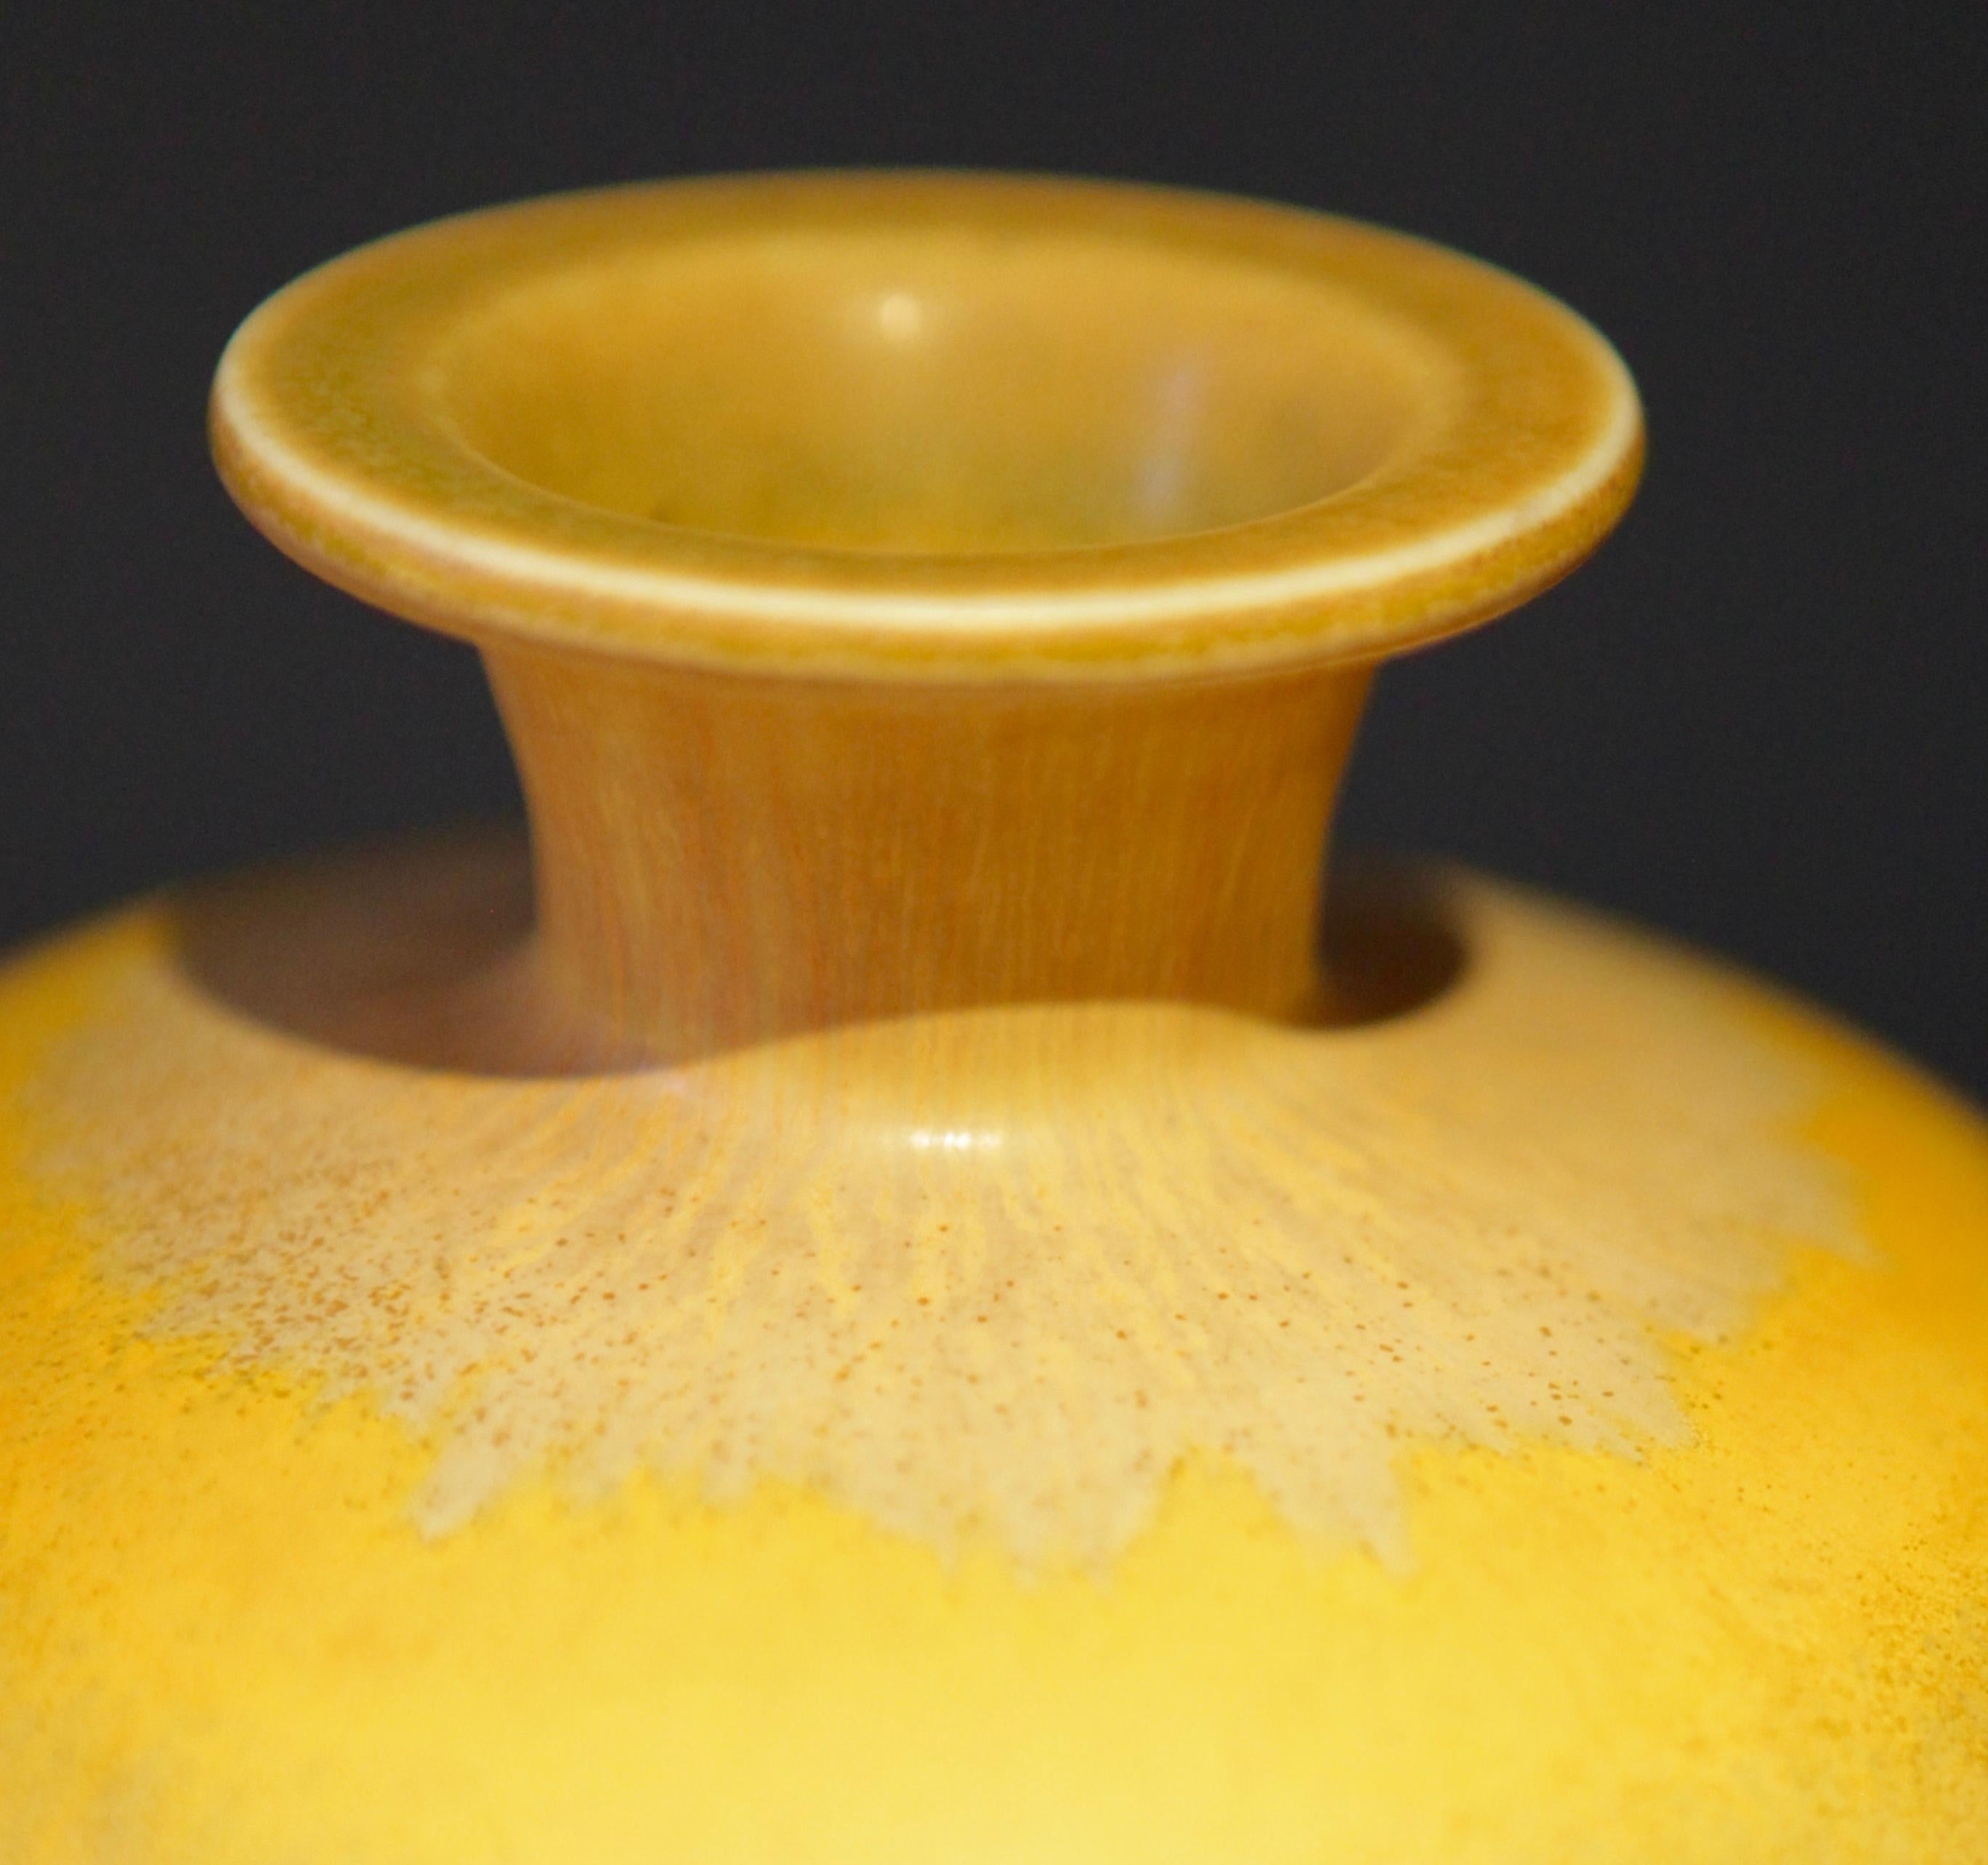 Berndt Friberg, stoneware vase, yellow harpel glazed,
signed Friberg and Gustavsberg studio,
Sweden, 1969.
Excellent condition.